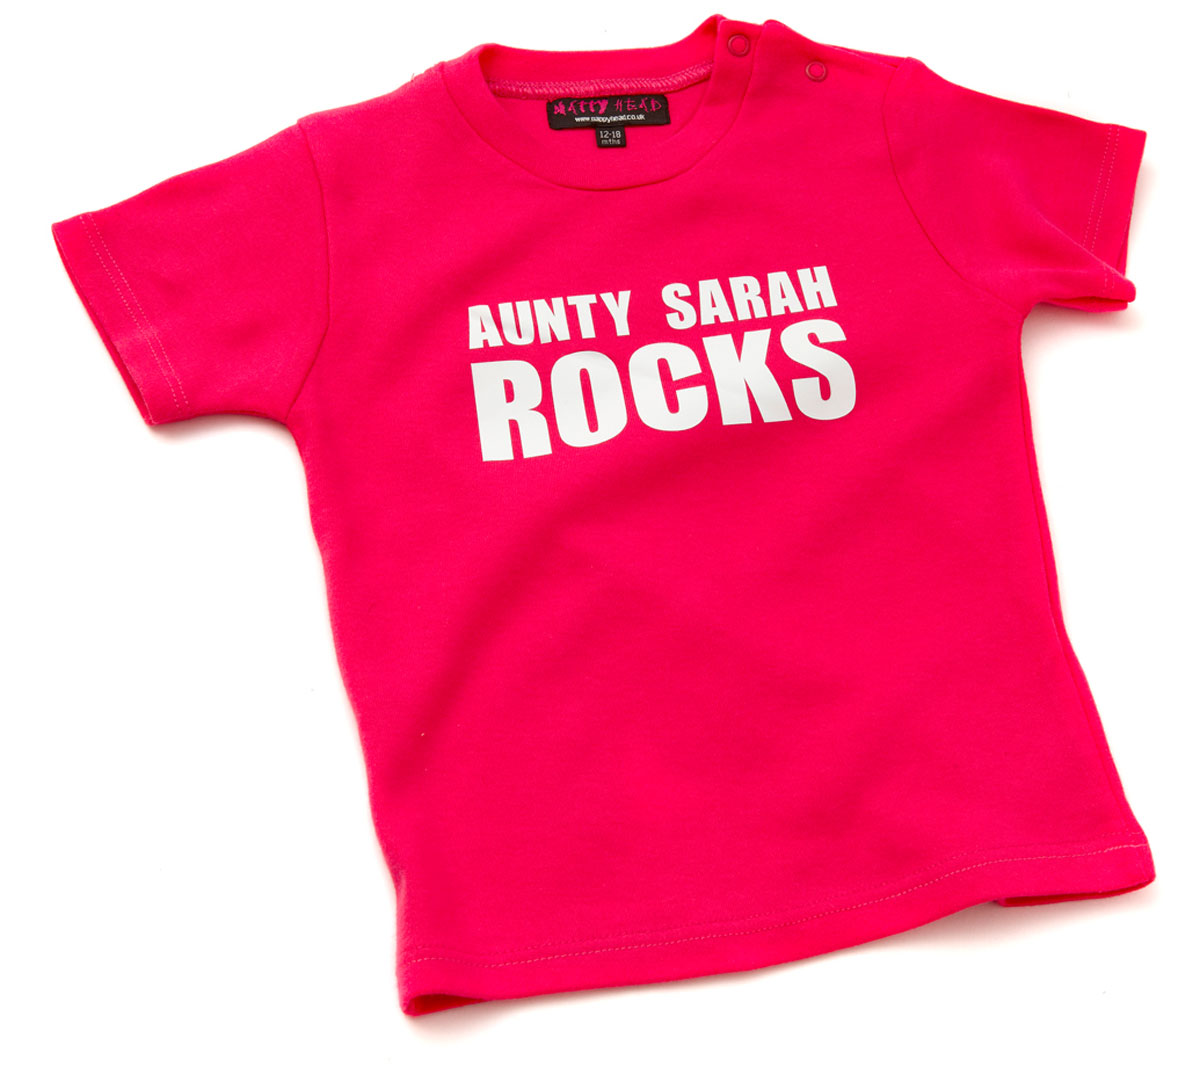 3 Baby T Shirts Ideas